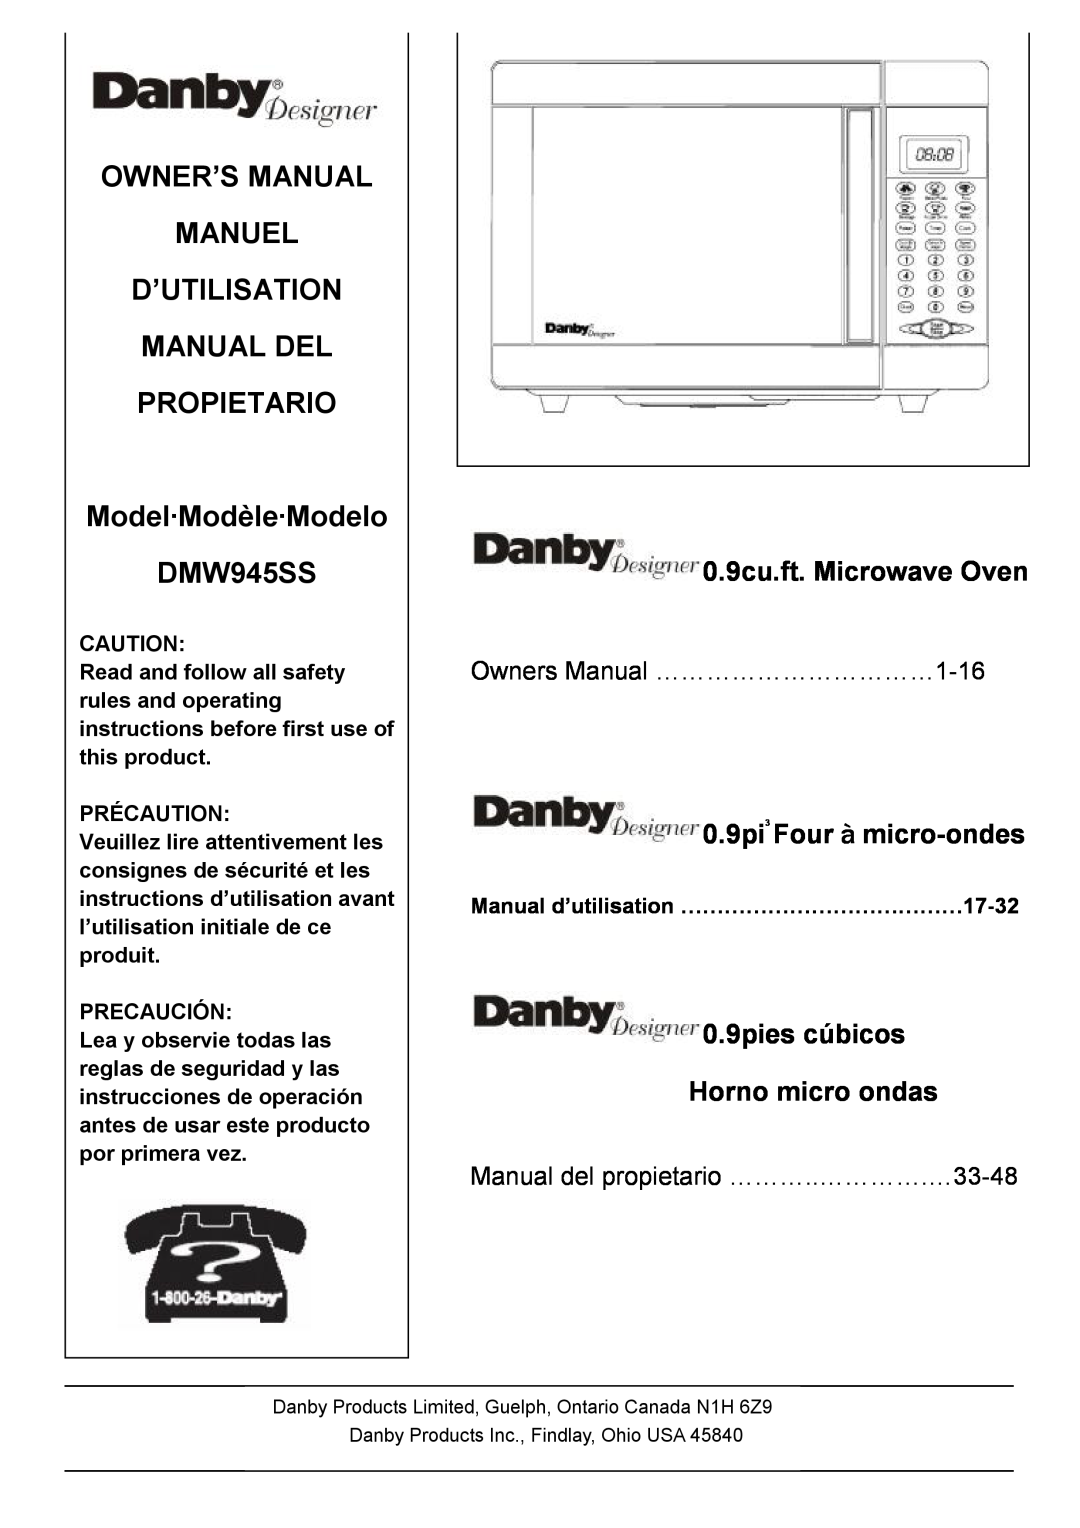 Danby owner manual Model·Modèle·Modelo DMW945SS, Manual del propietario ………..………….…33-48, 0.9cu.ft. Microwave Oven 